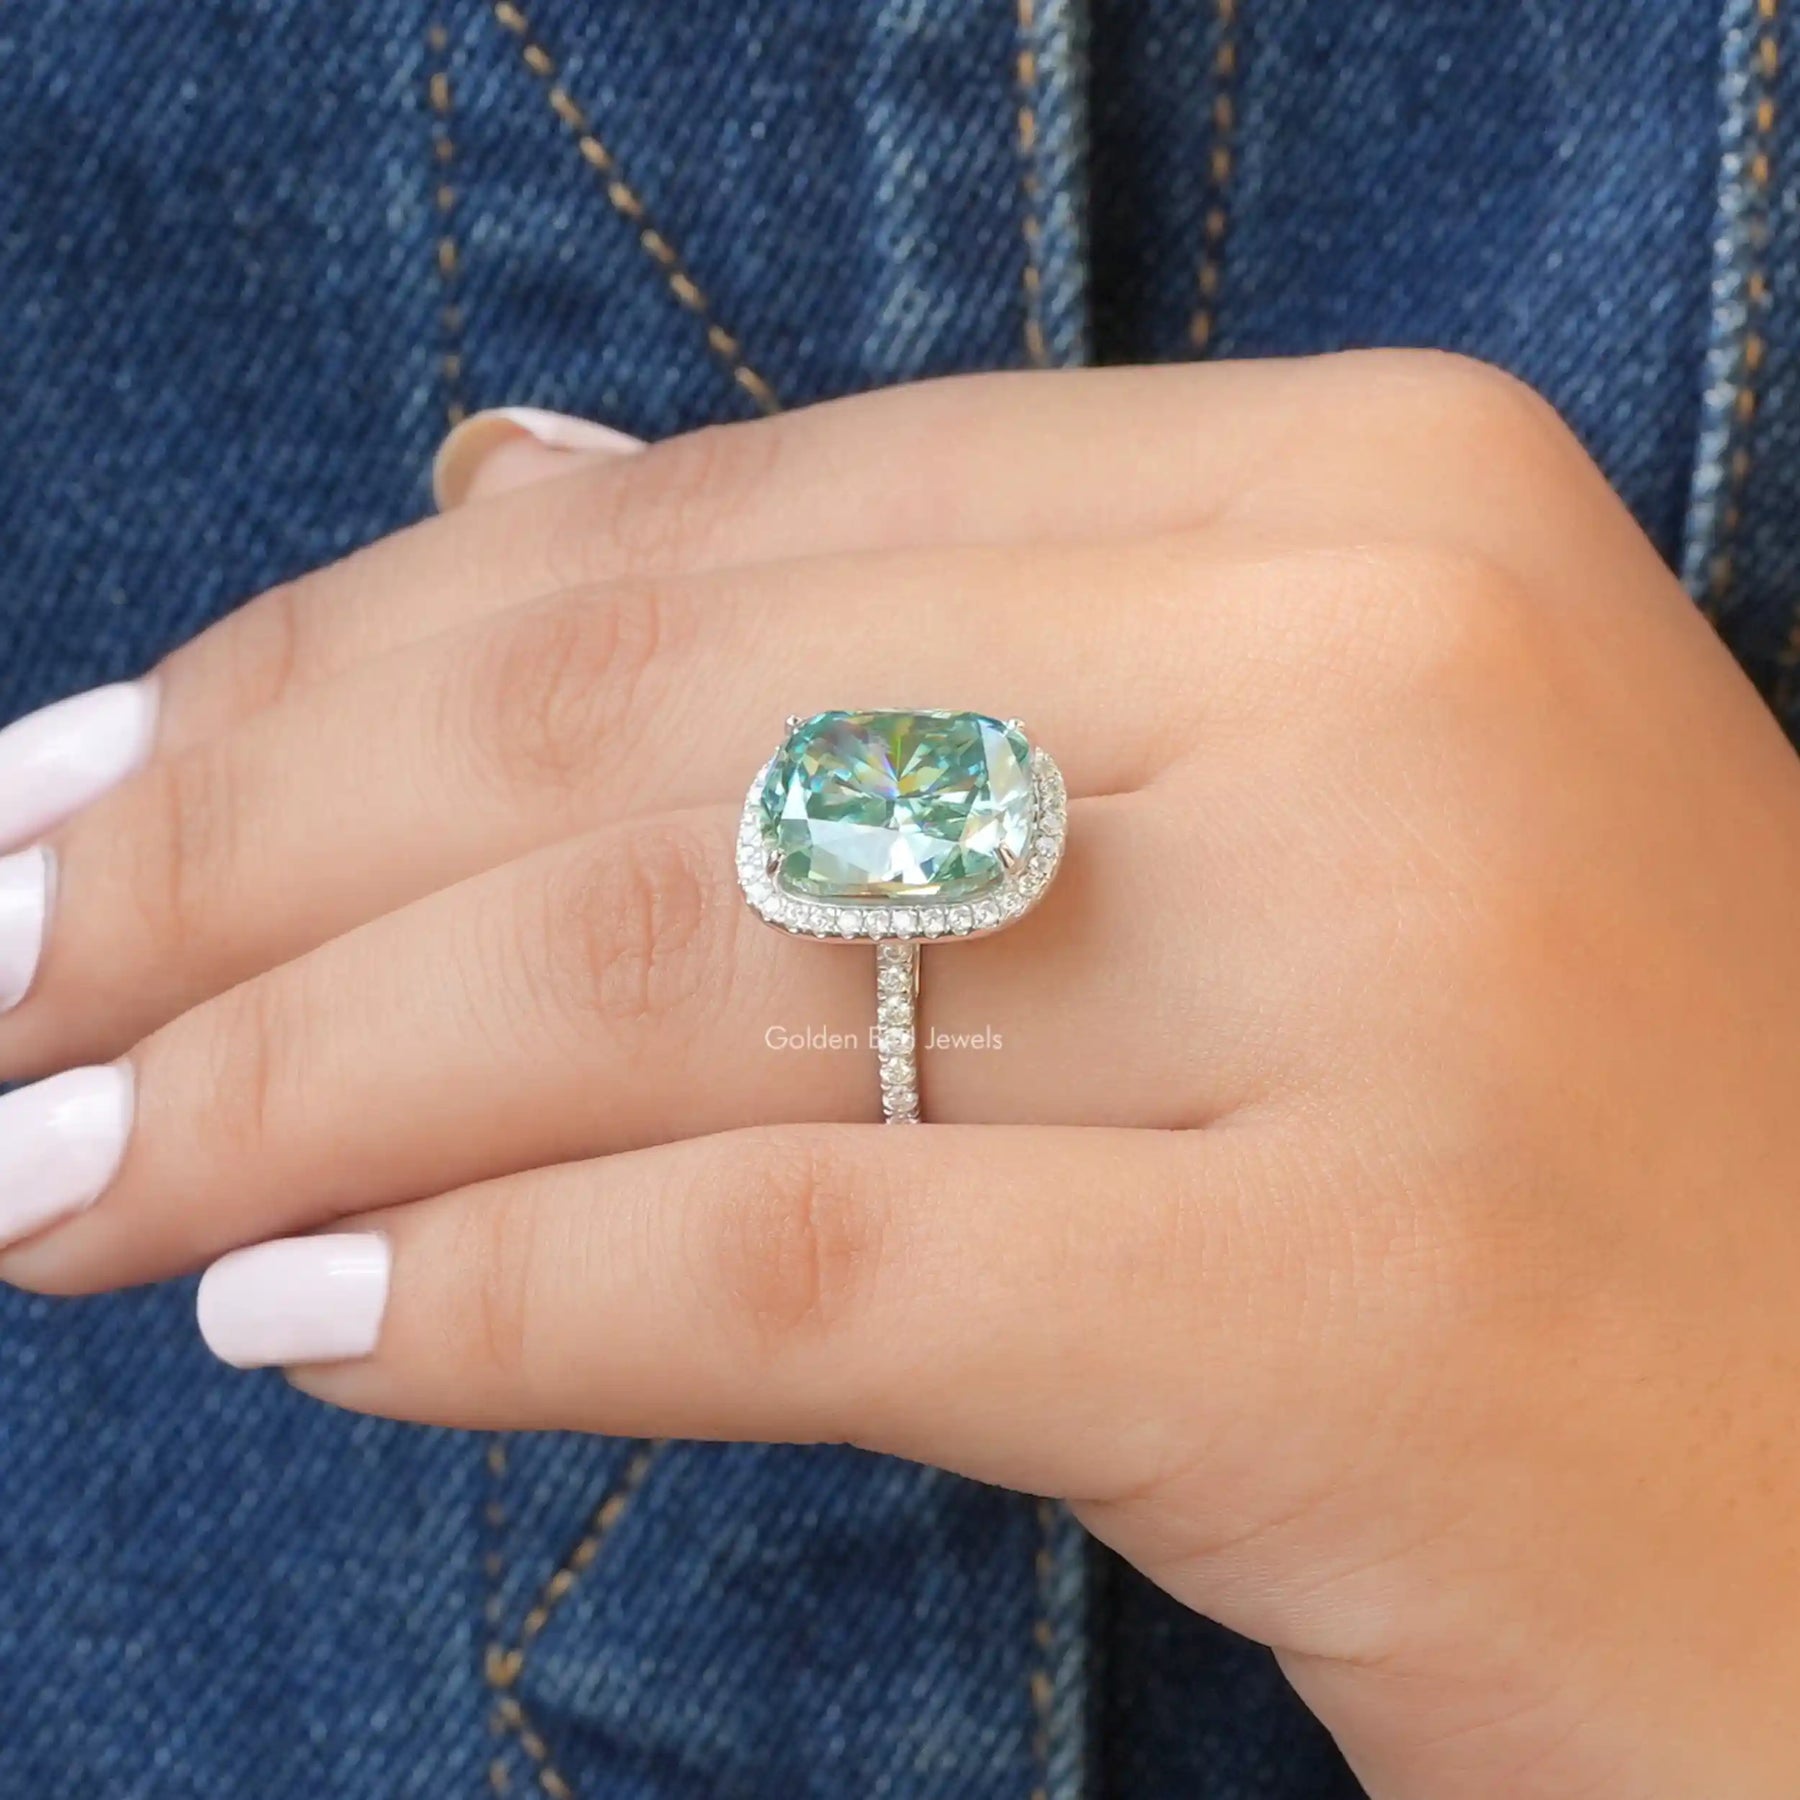 [Moissanite blue cushion cut engagement ring in 14k white gold]-[Golden Bird Jewels]